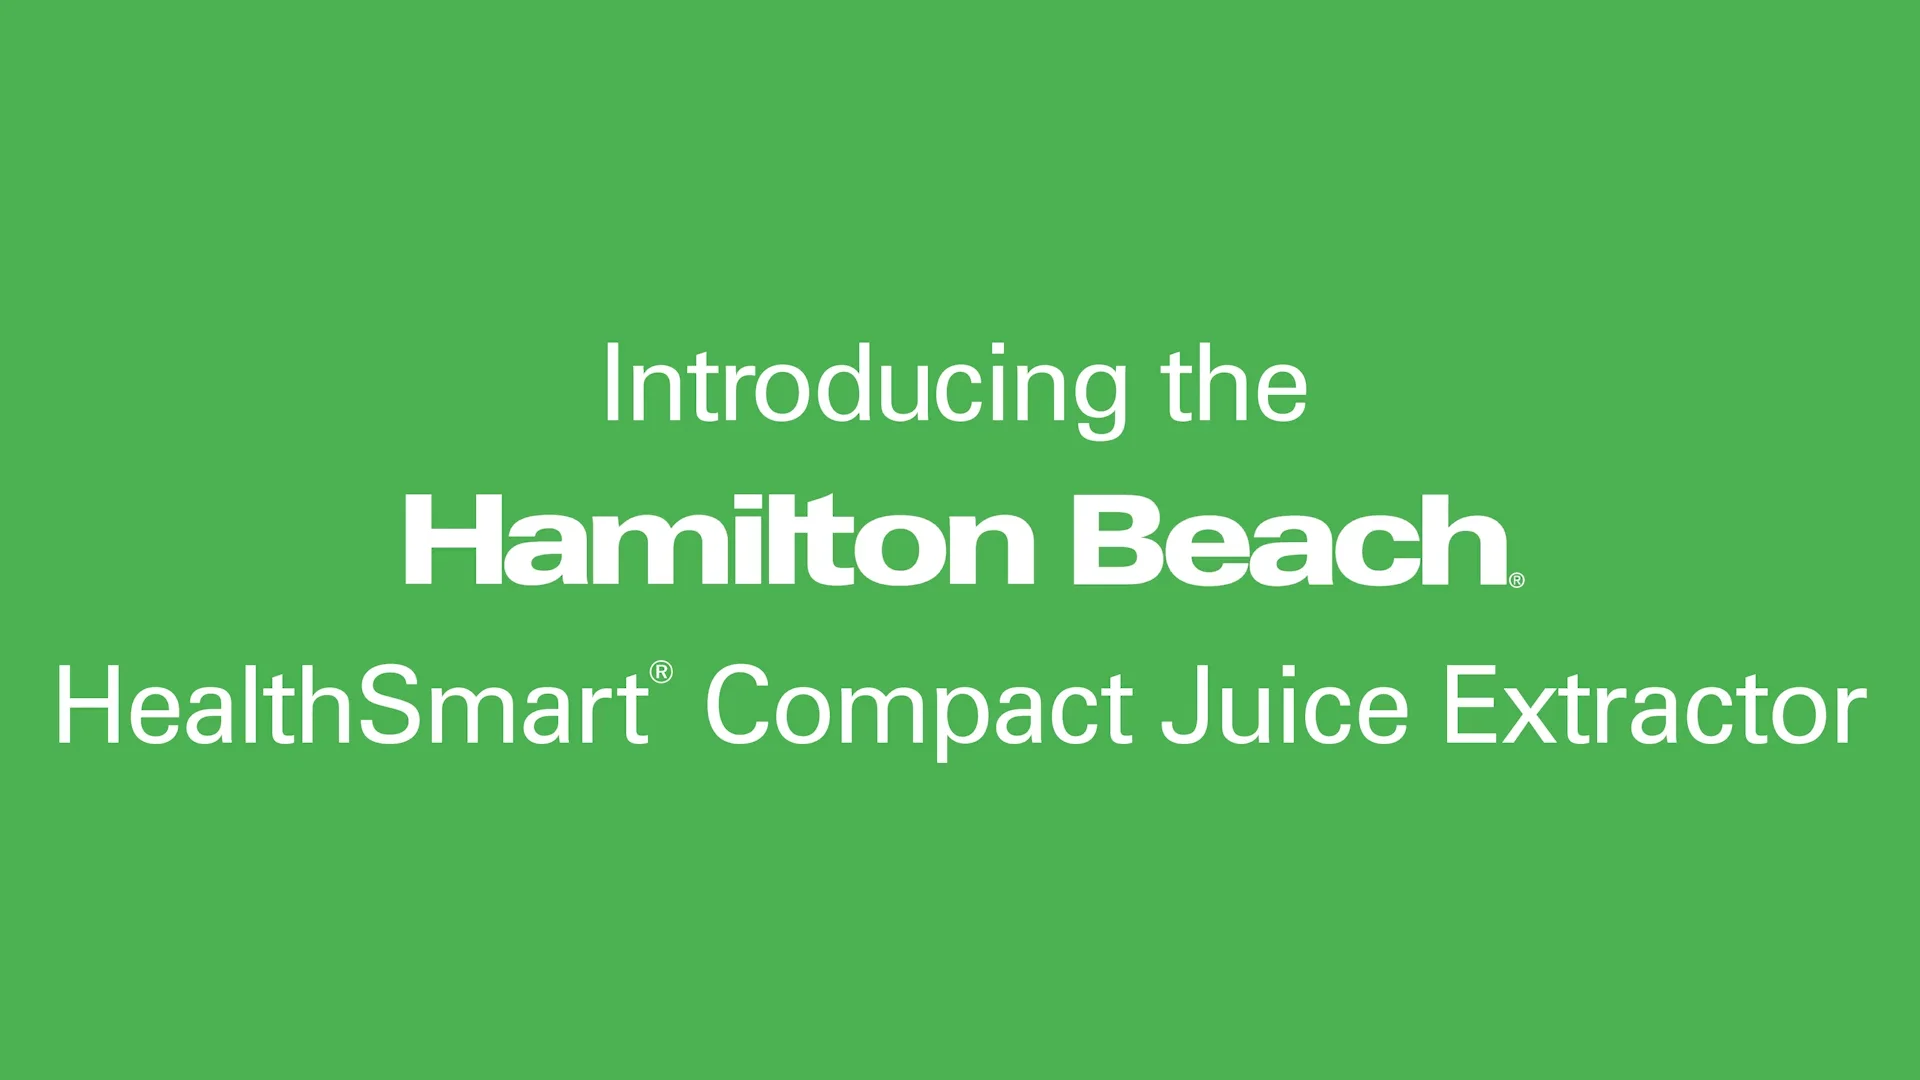 Hamilton Beach Juice Extractor, HealthSmart